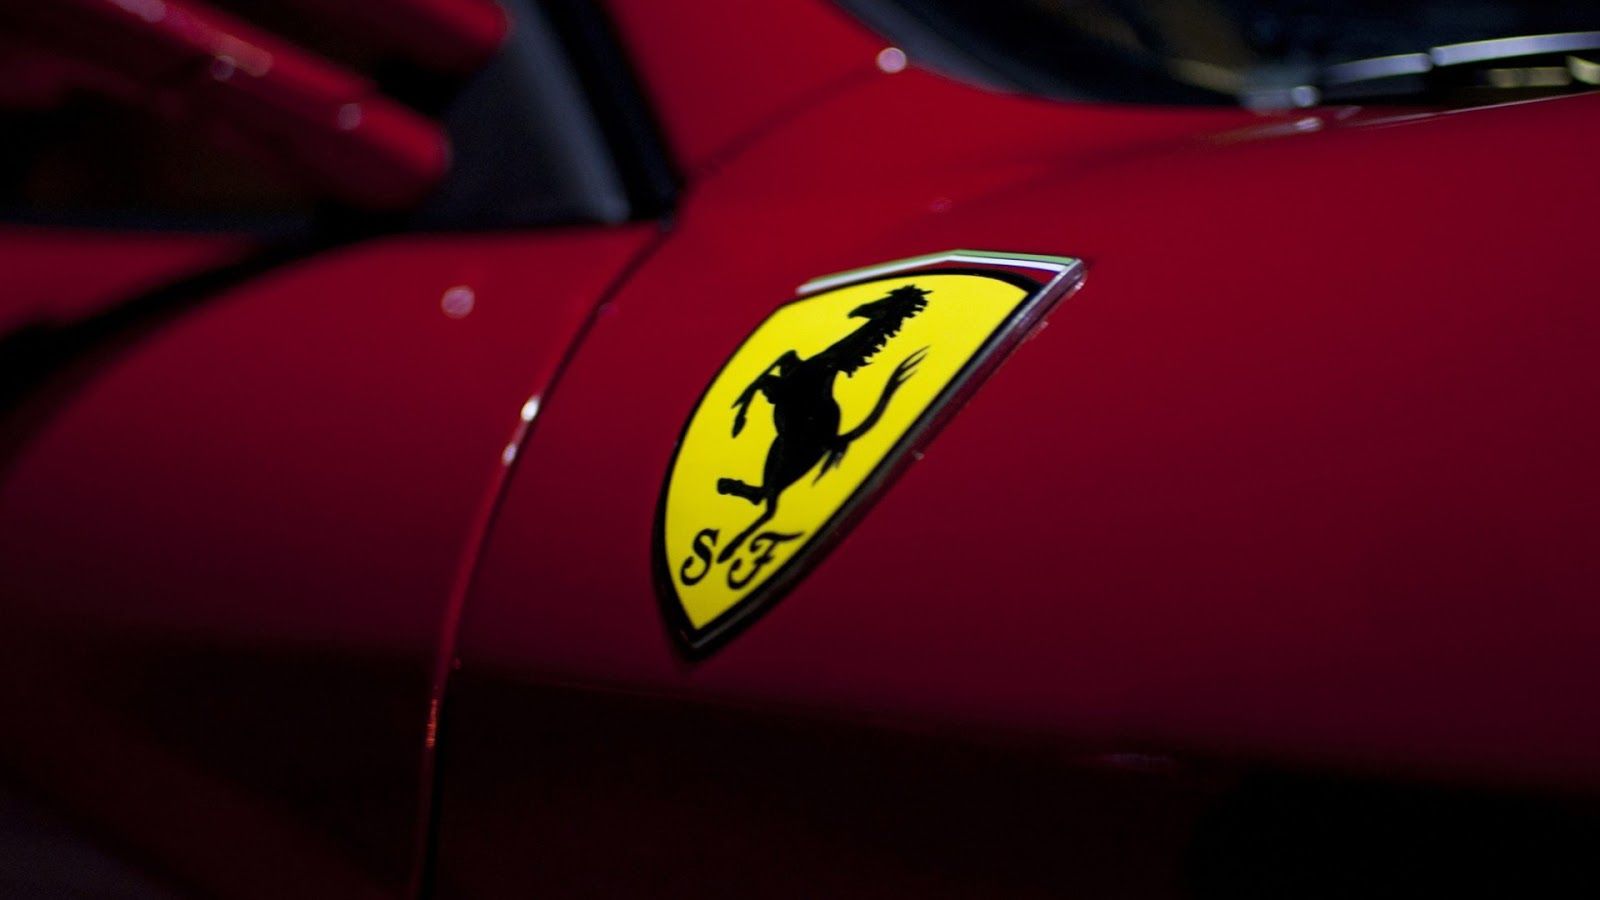 4K Ferrari Wallpapers • HD Desktop Backgrounds • TrumpWallpapers